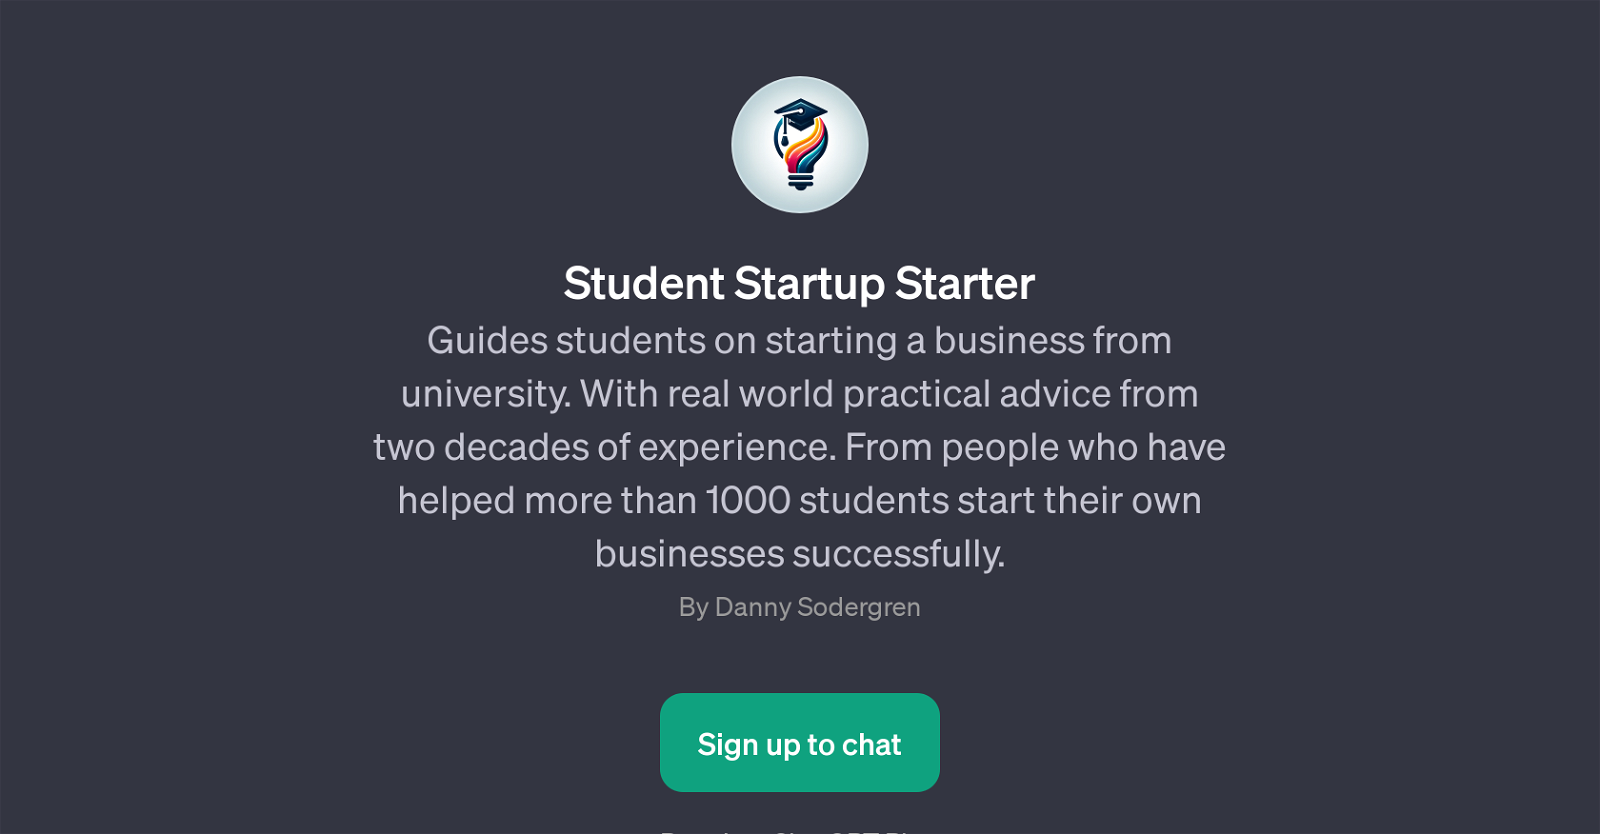 Student Startup Starter website